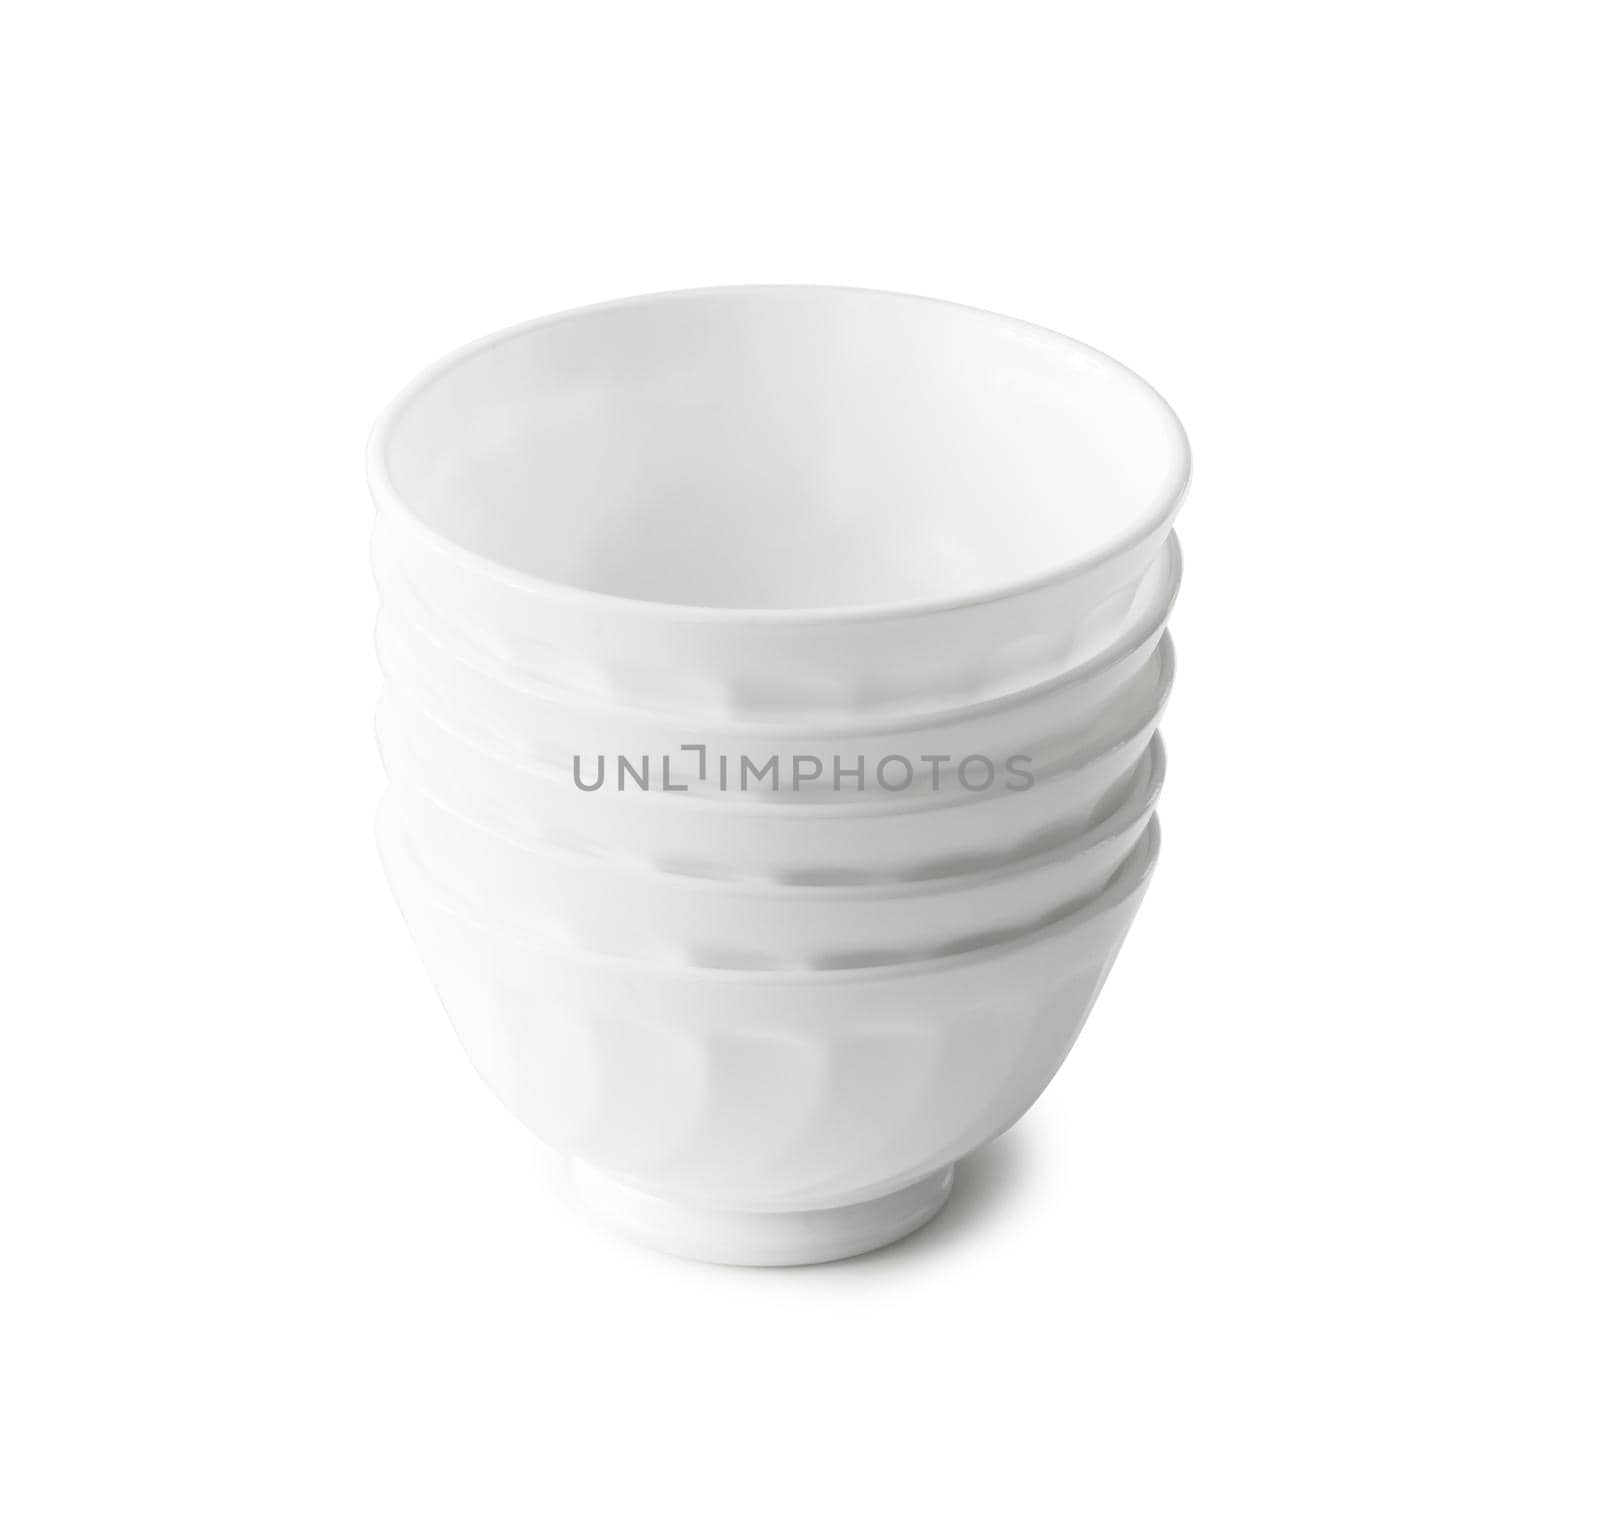 set of white plastic bowls isolated on white background